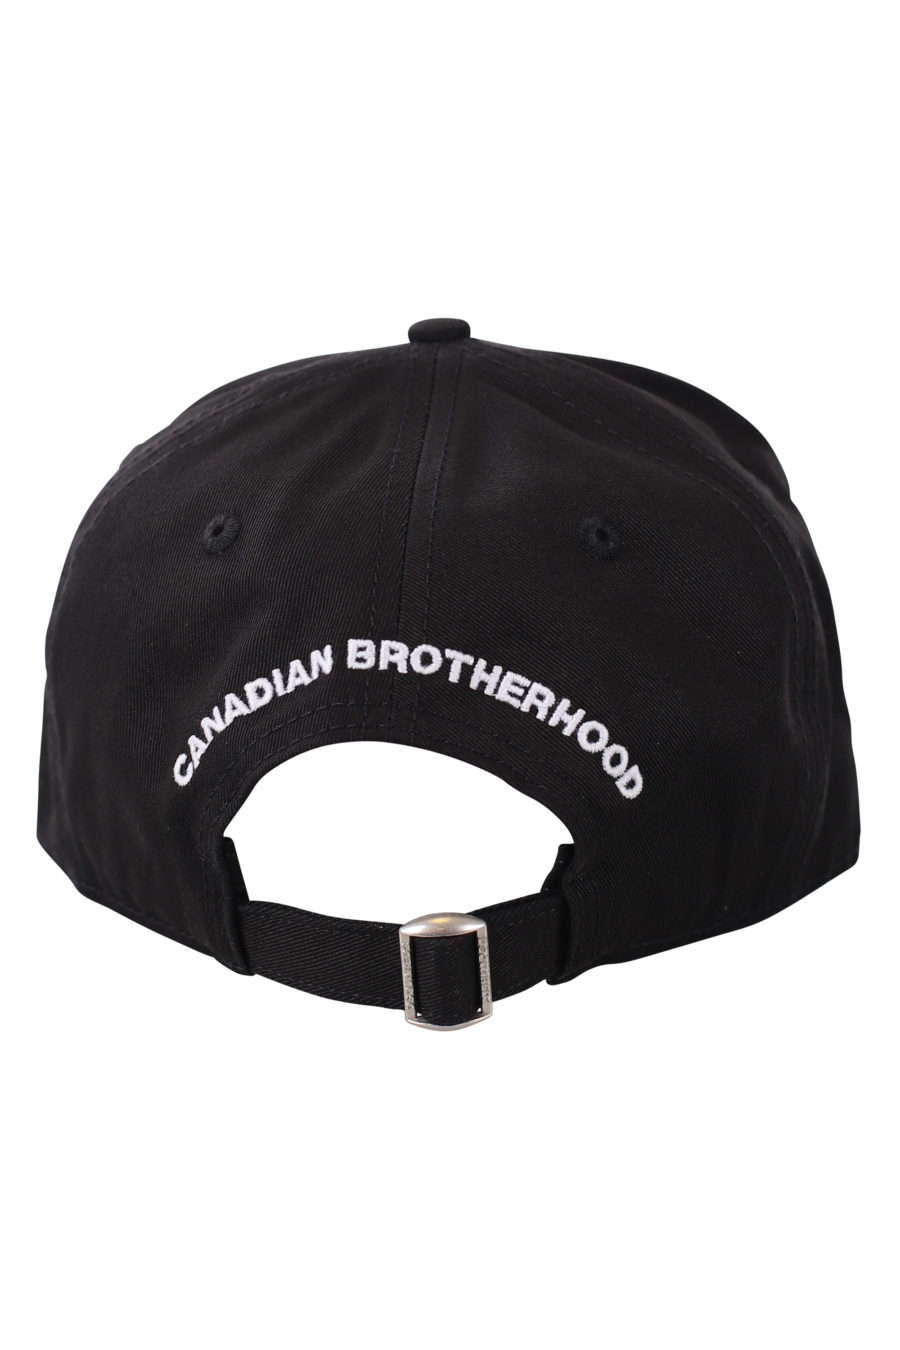 Gorra negra ajustable con logo blanco pequeño - IMG 0450